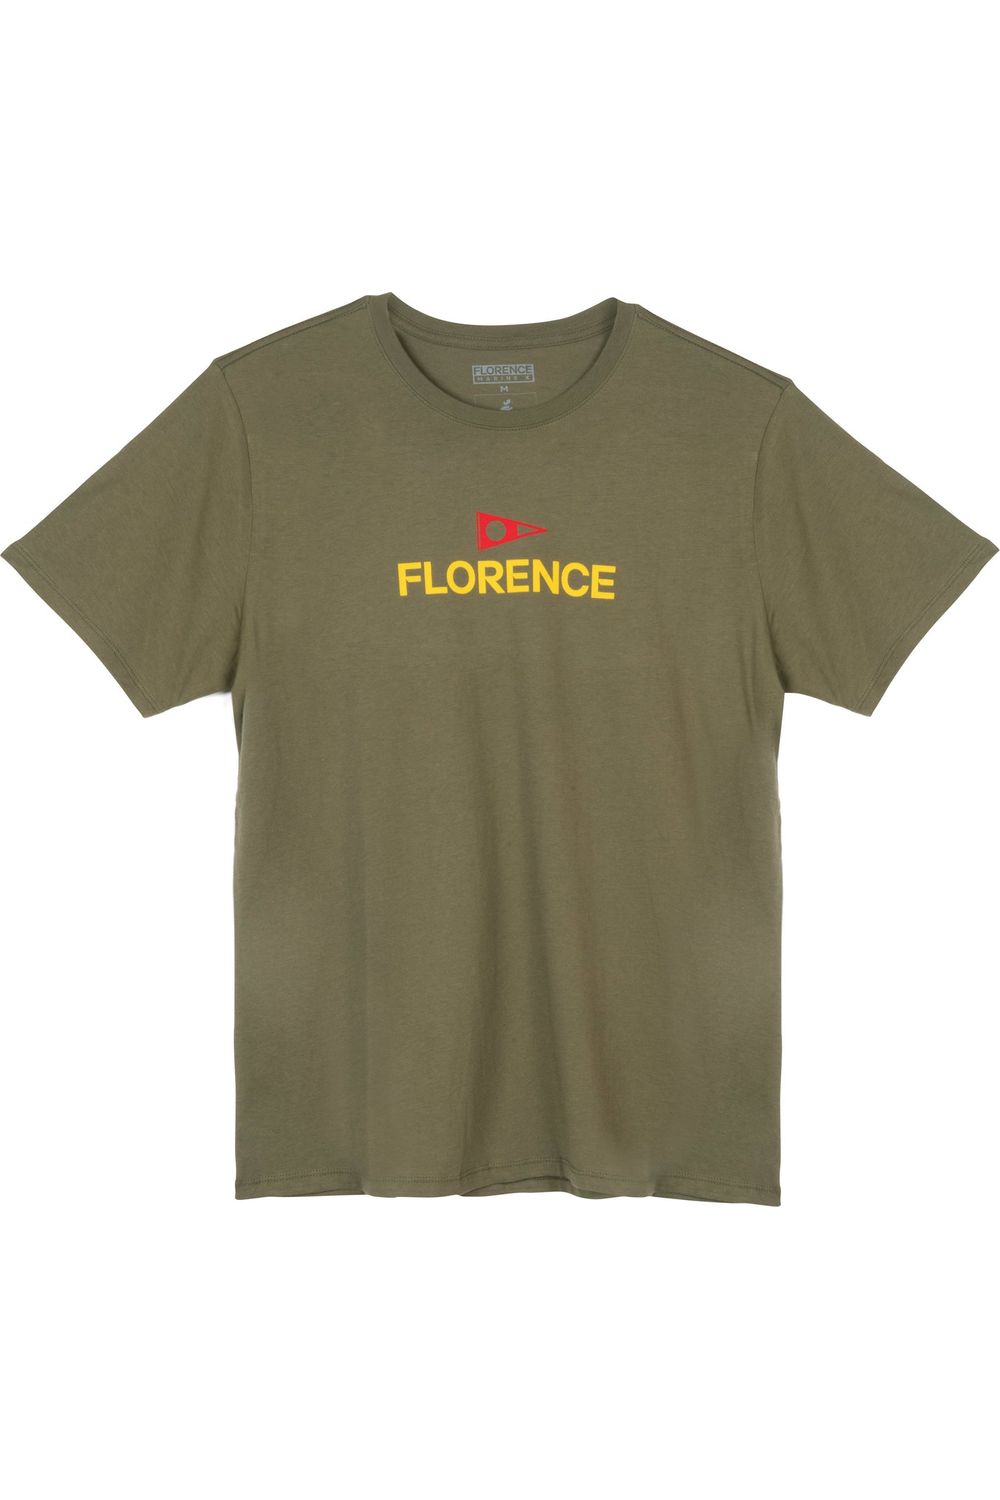 Florence Marine X Logo Island Chain T-Shirt Burnt Olive